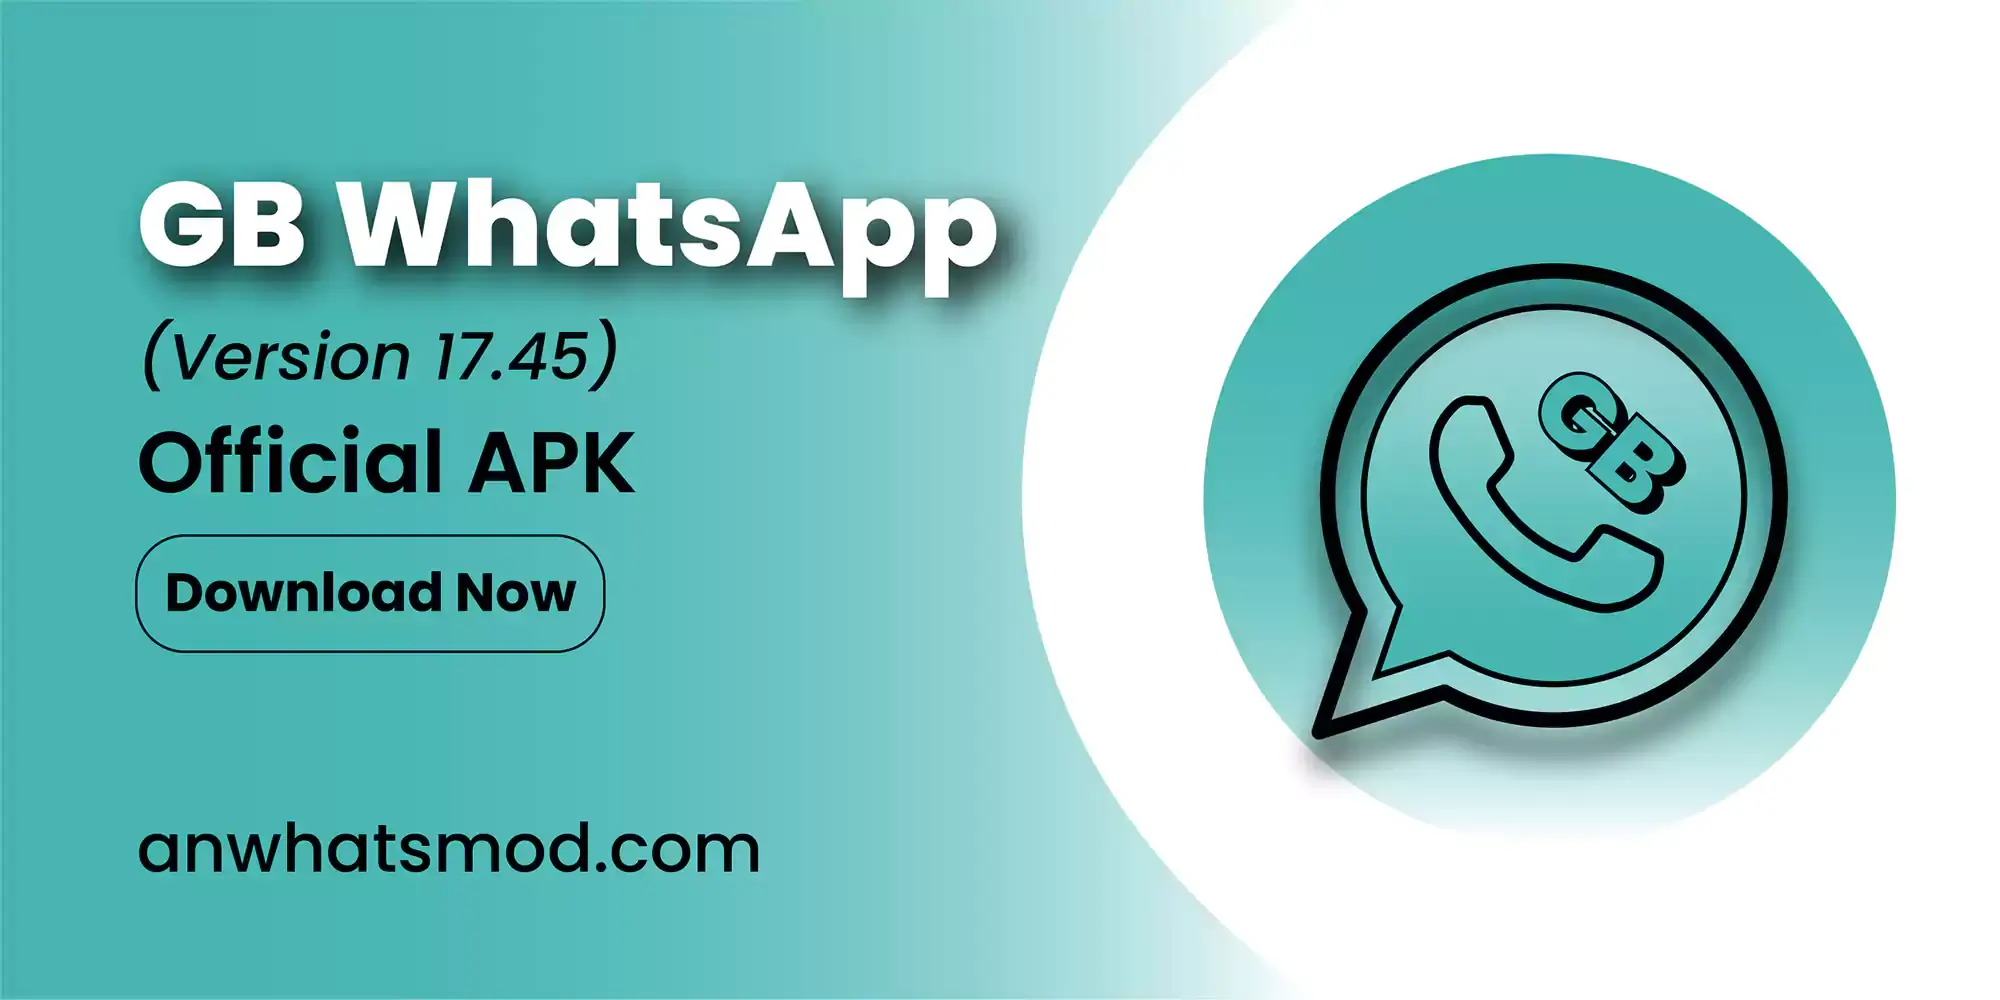 GB WhatsApp APK Download The Latest Version